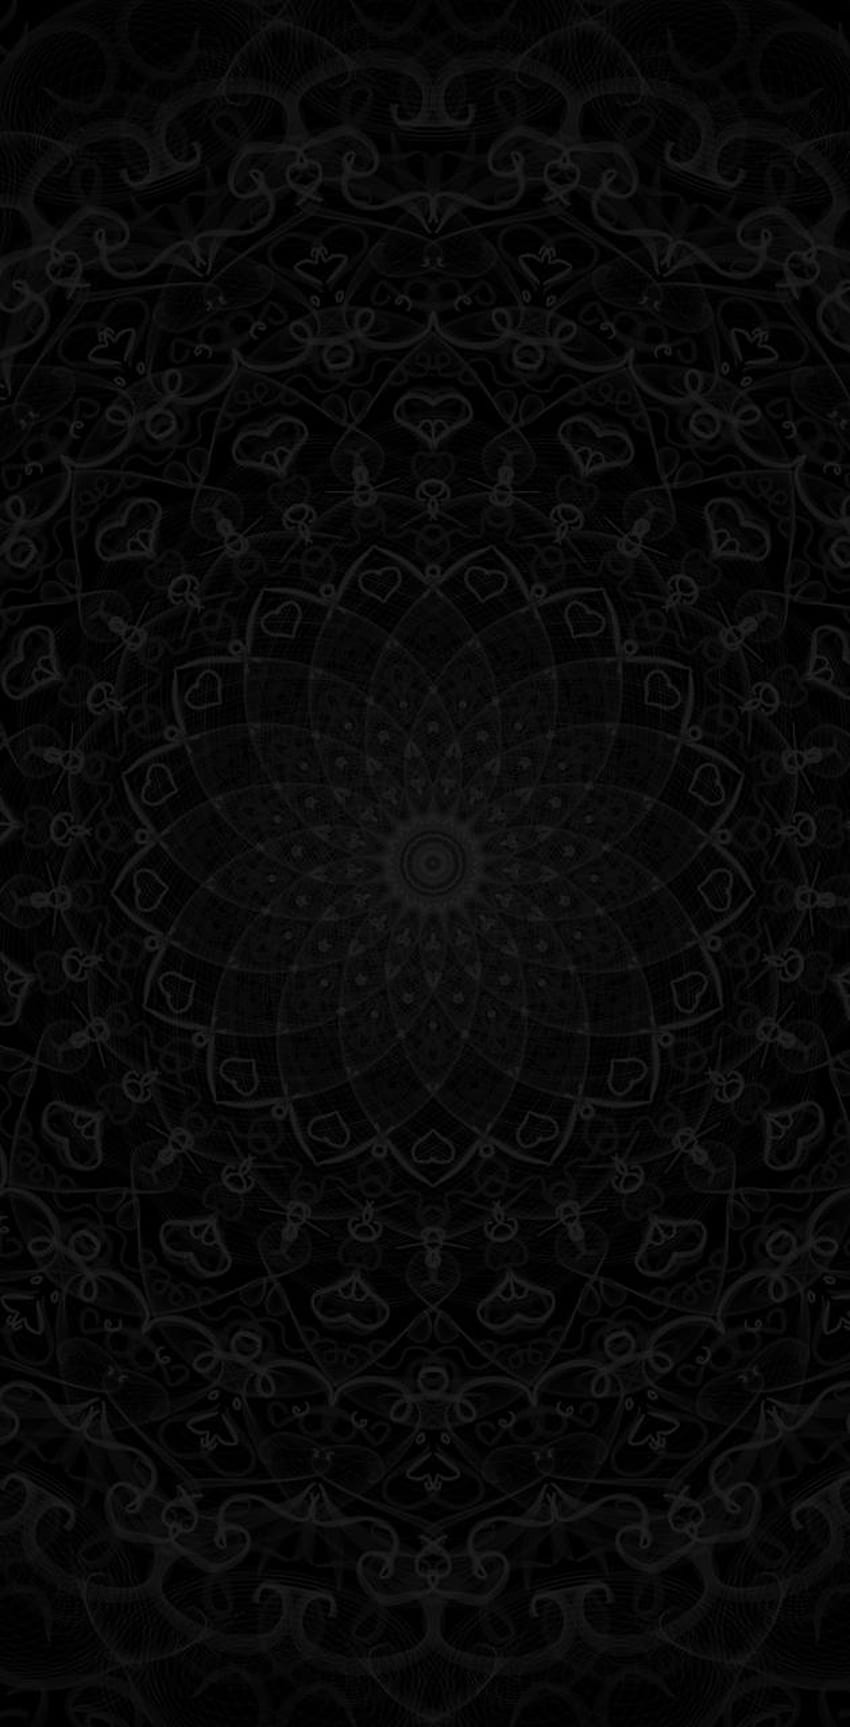 Mandala black background Vectors  Illustrations for Free Download  Freepik